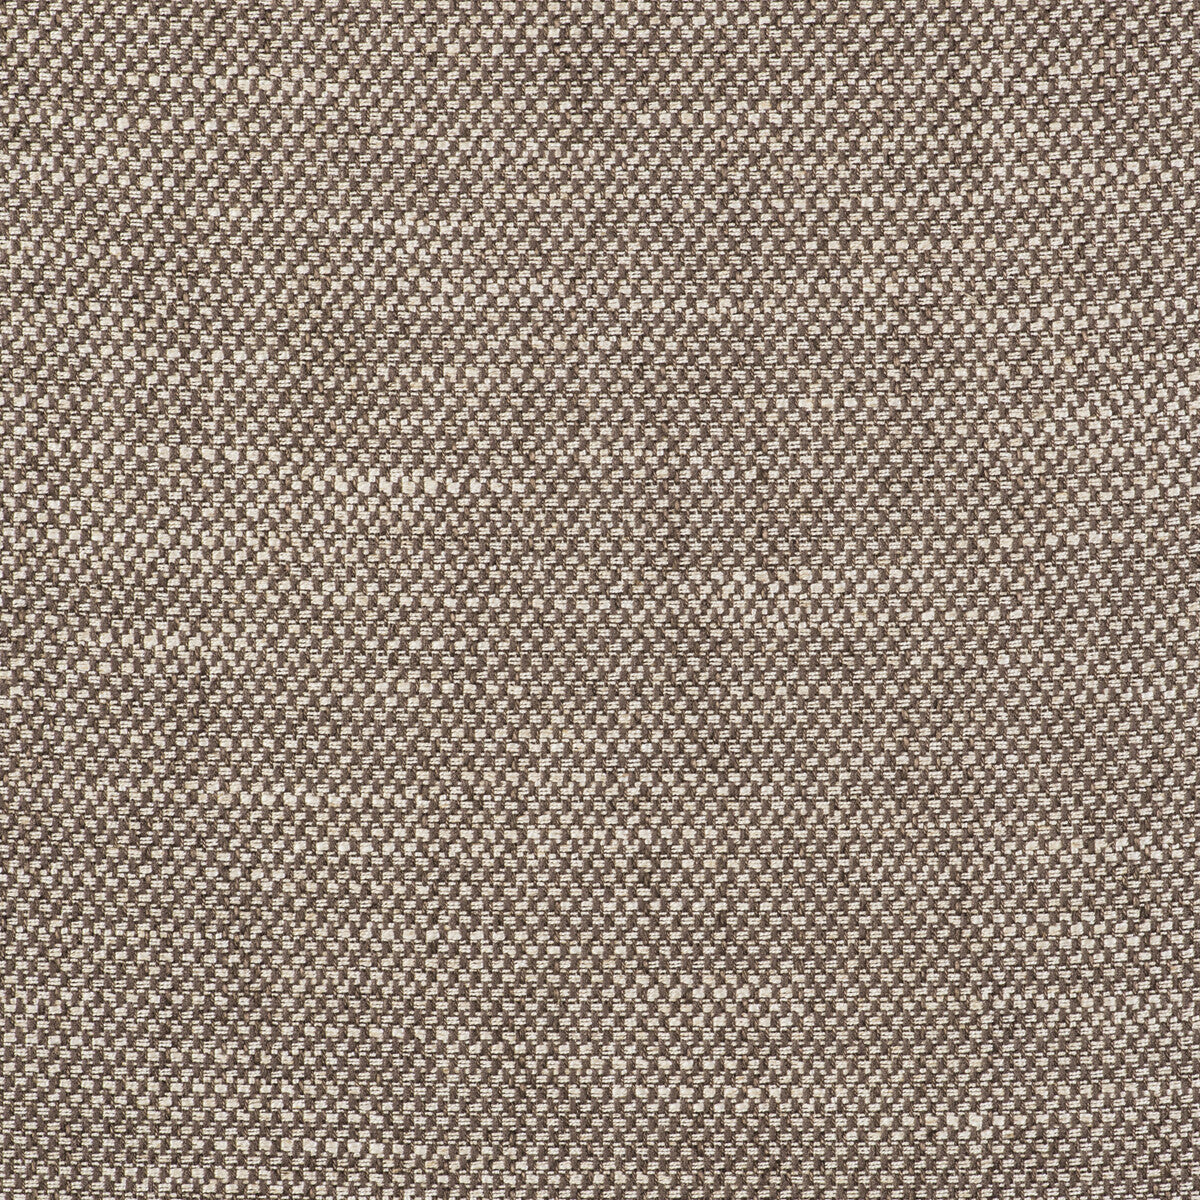 Acacia fabric in tostado color - pattern GDT5519.002.0 - by Gaston y Daniela in the Gaston Libreria collection